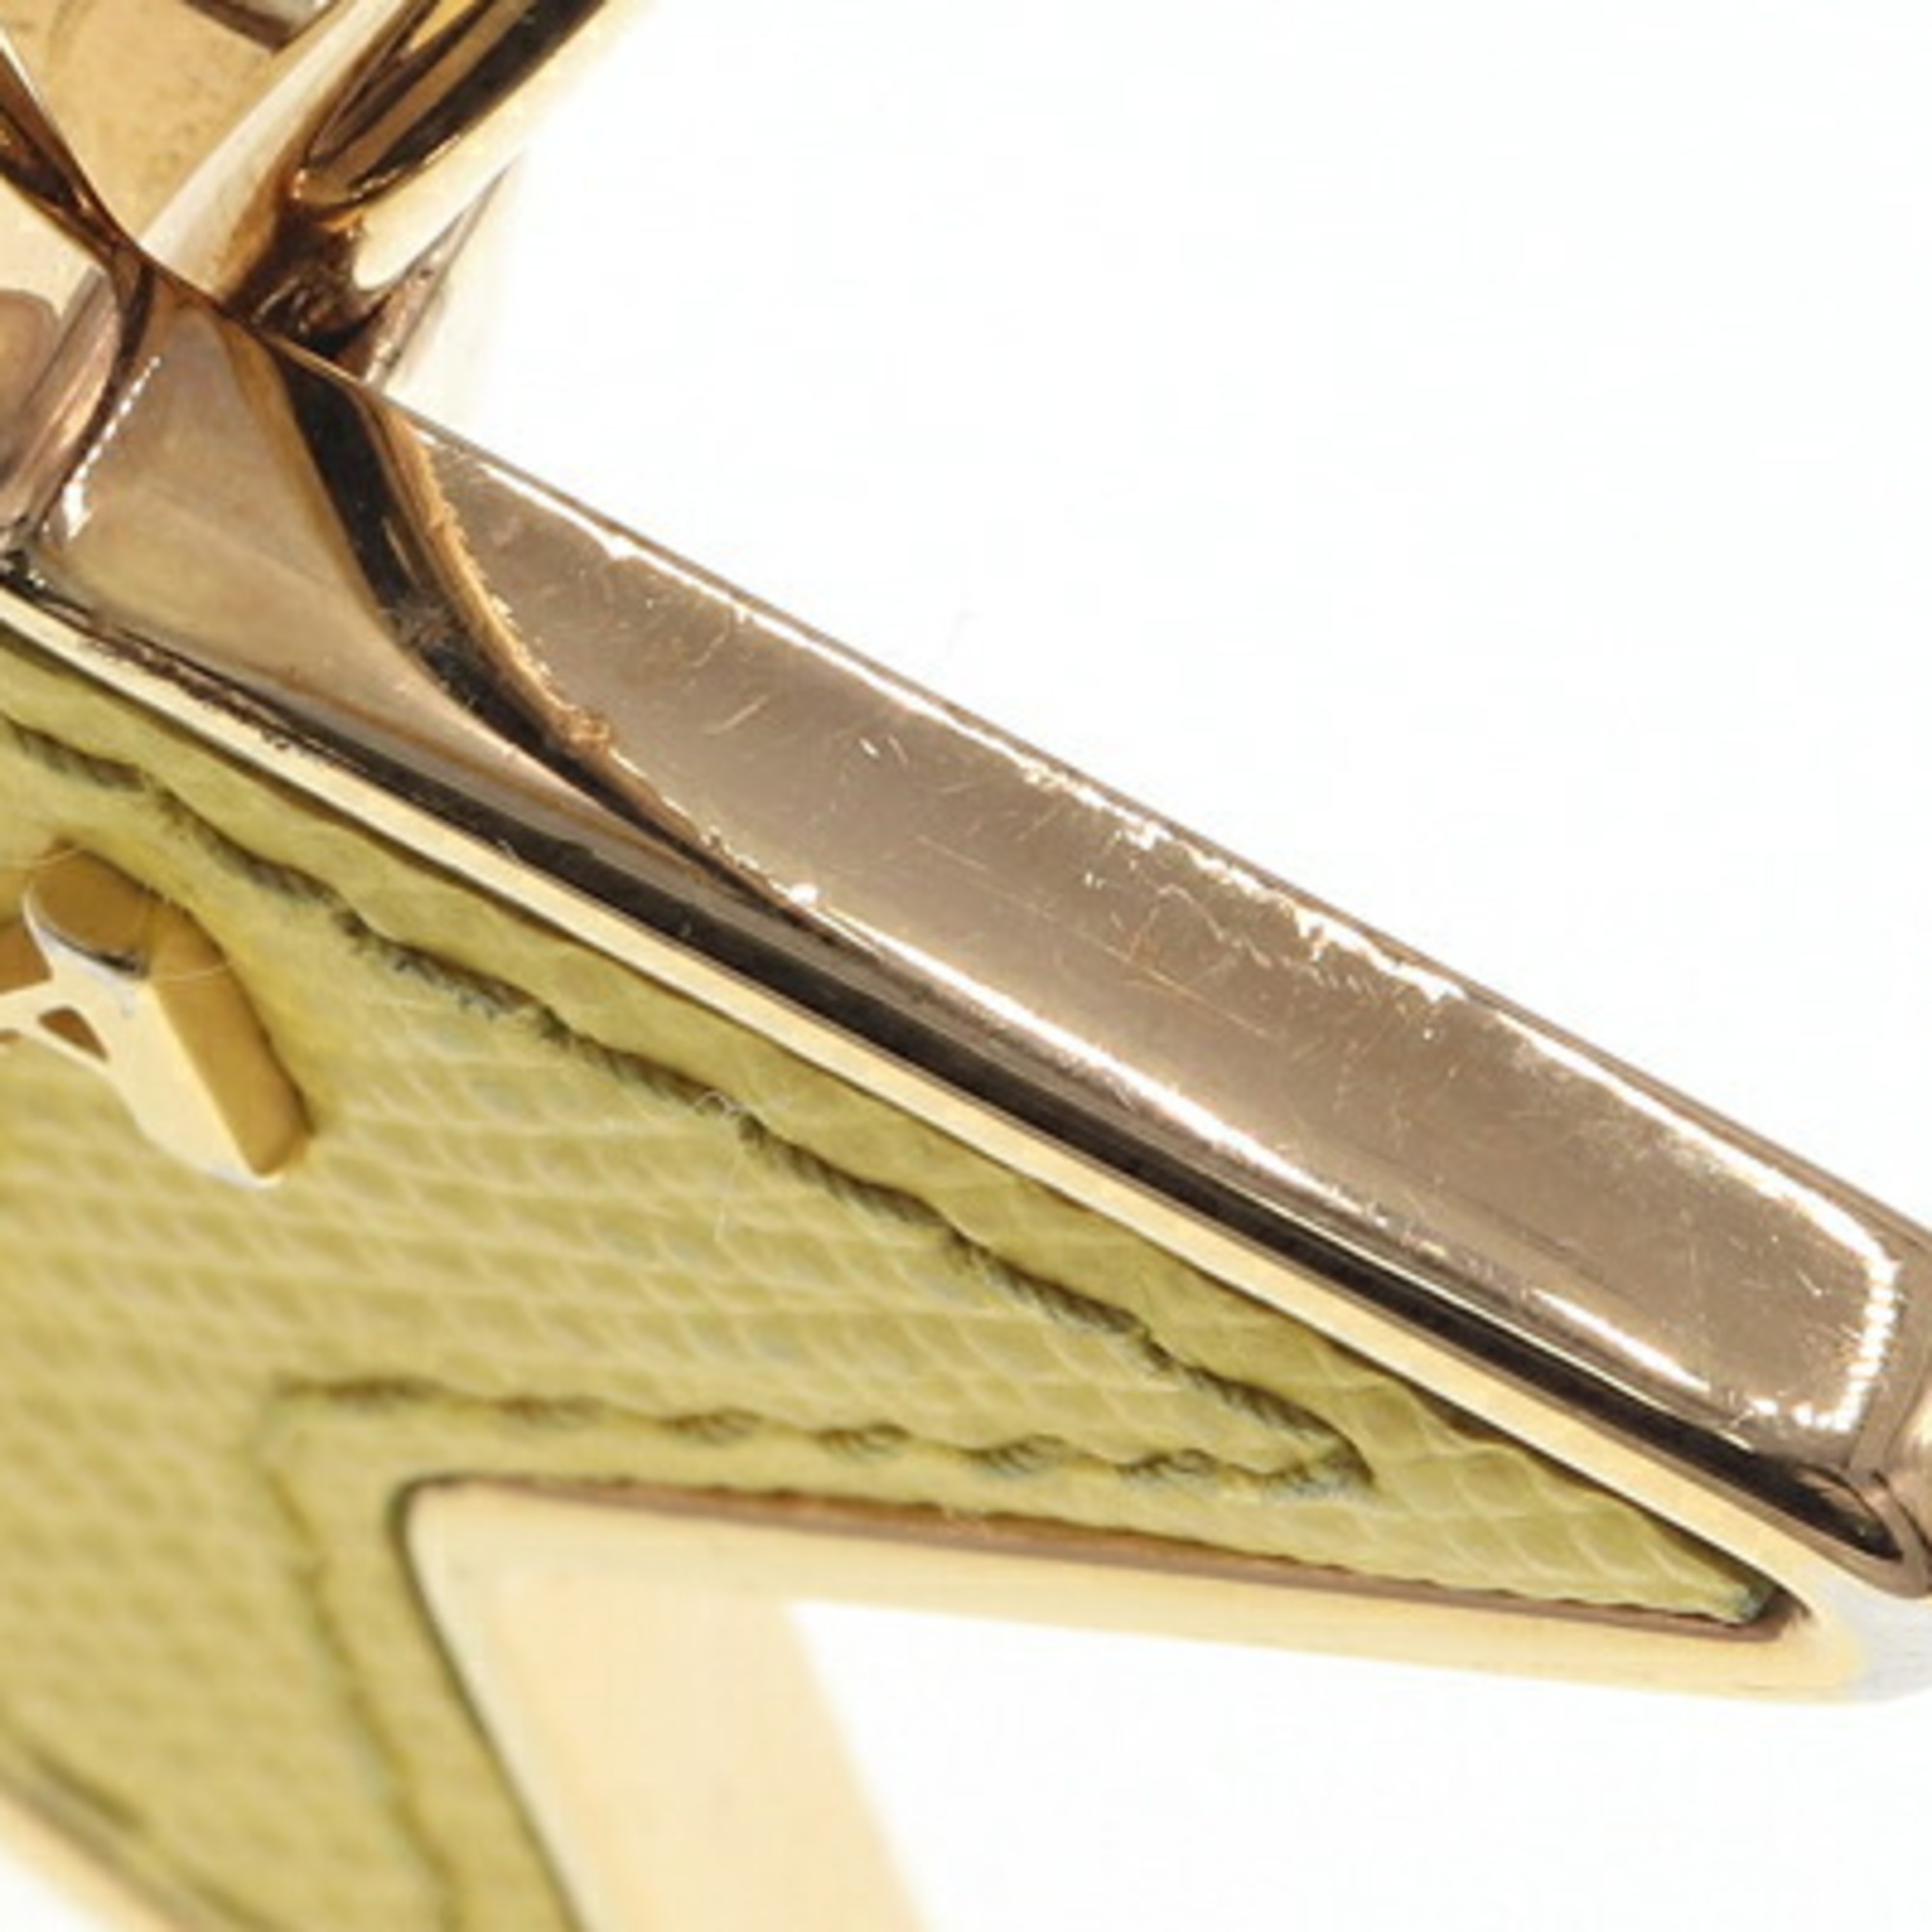 Prada Key Ring 1PP049 Yellow Leather Metal Star Keychain Men's Women's PRADA